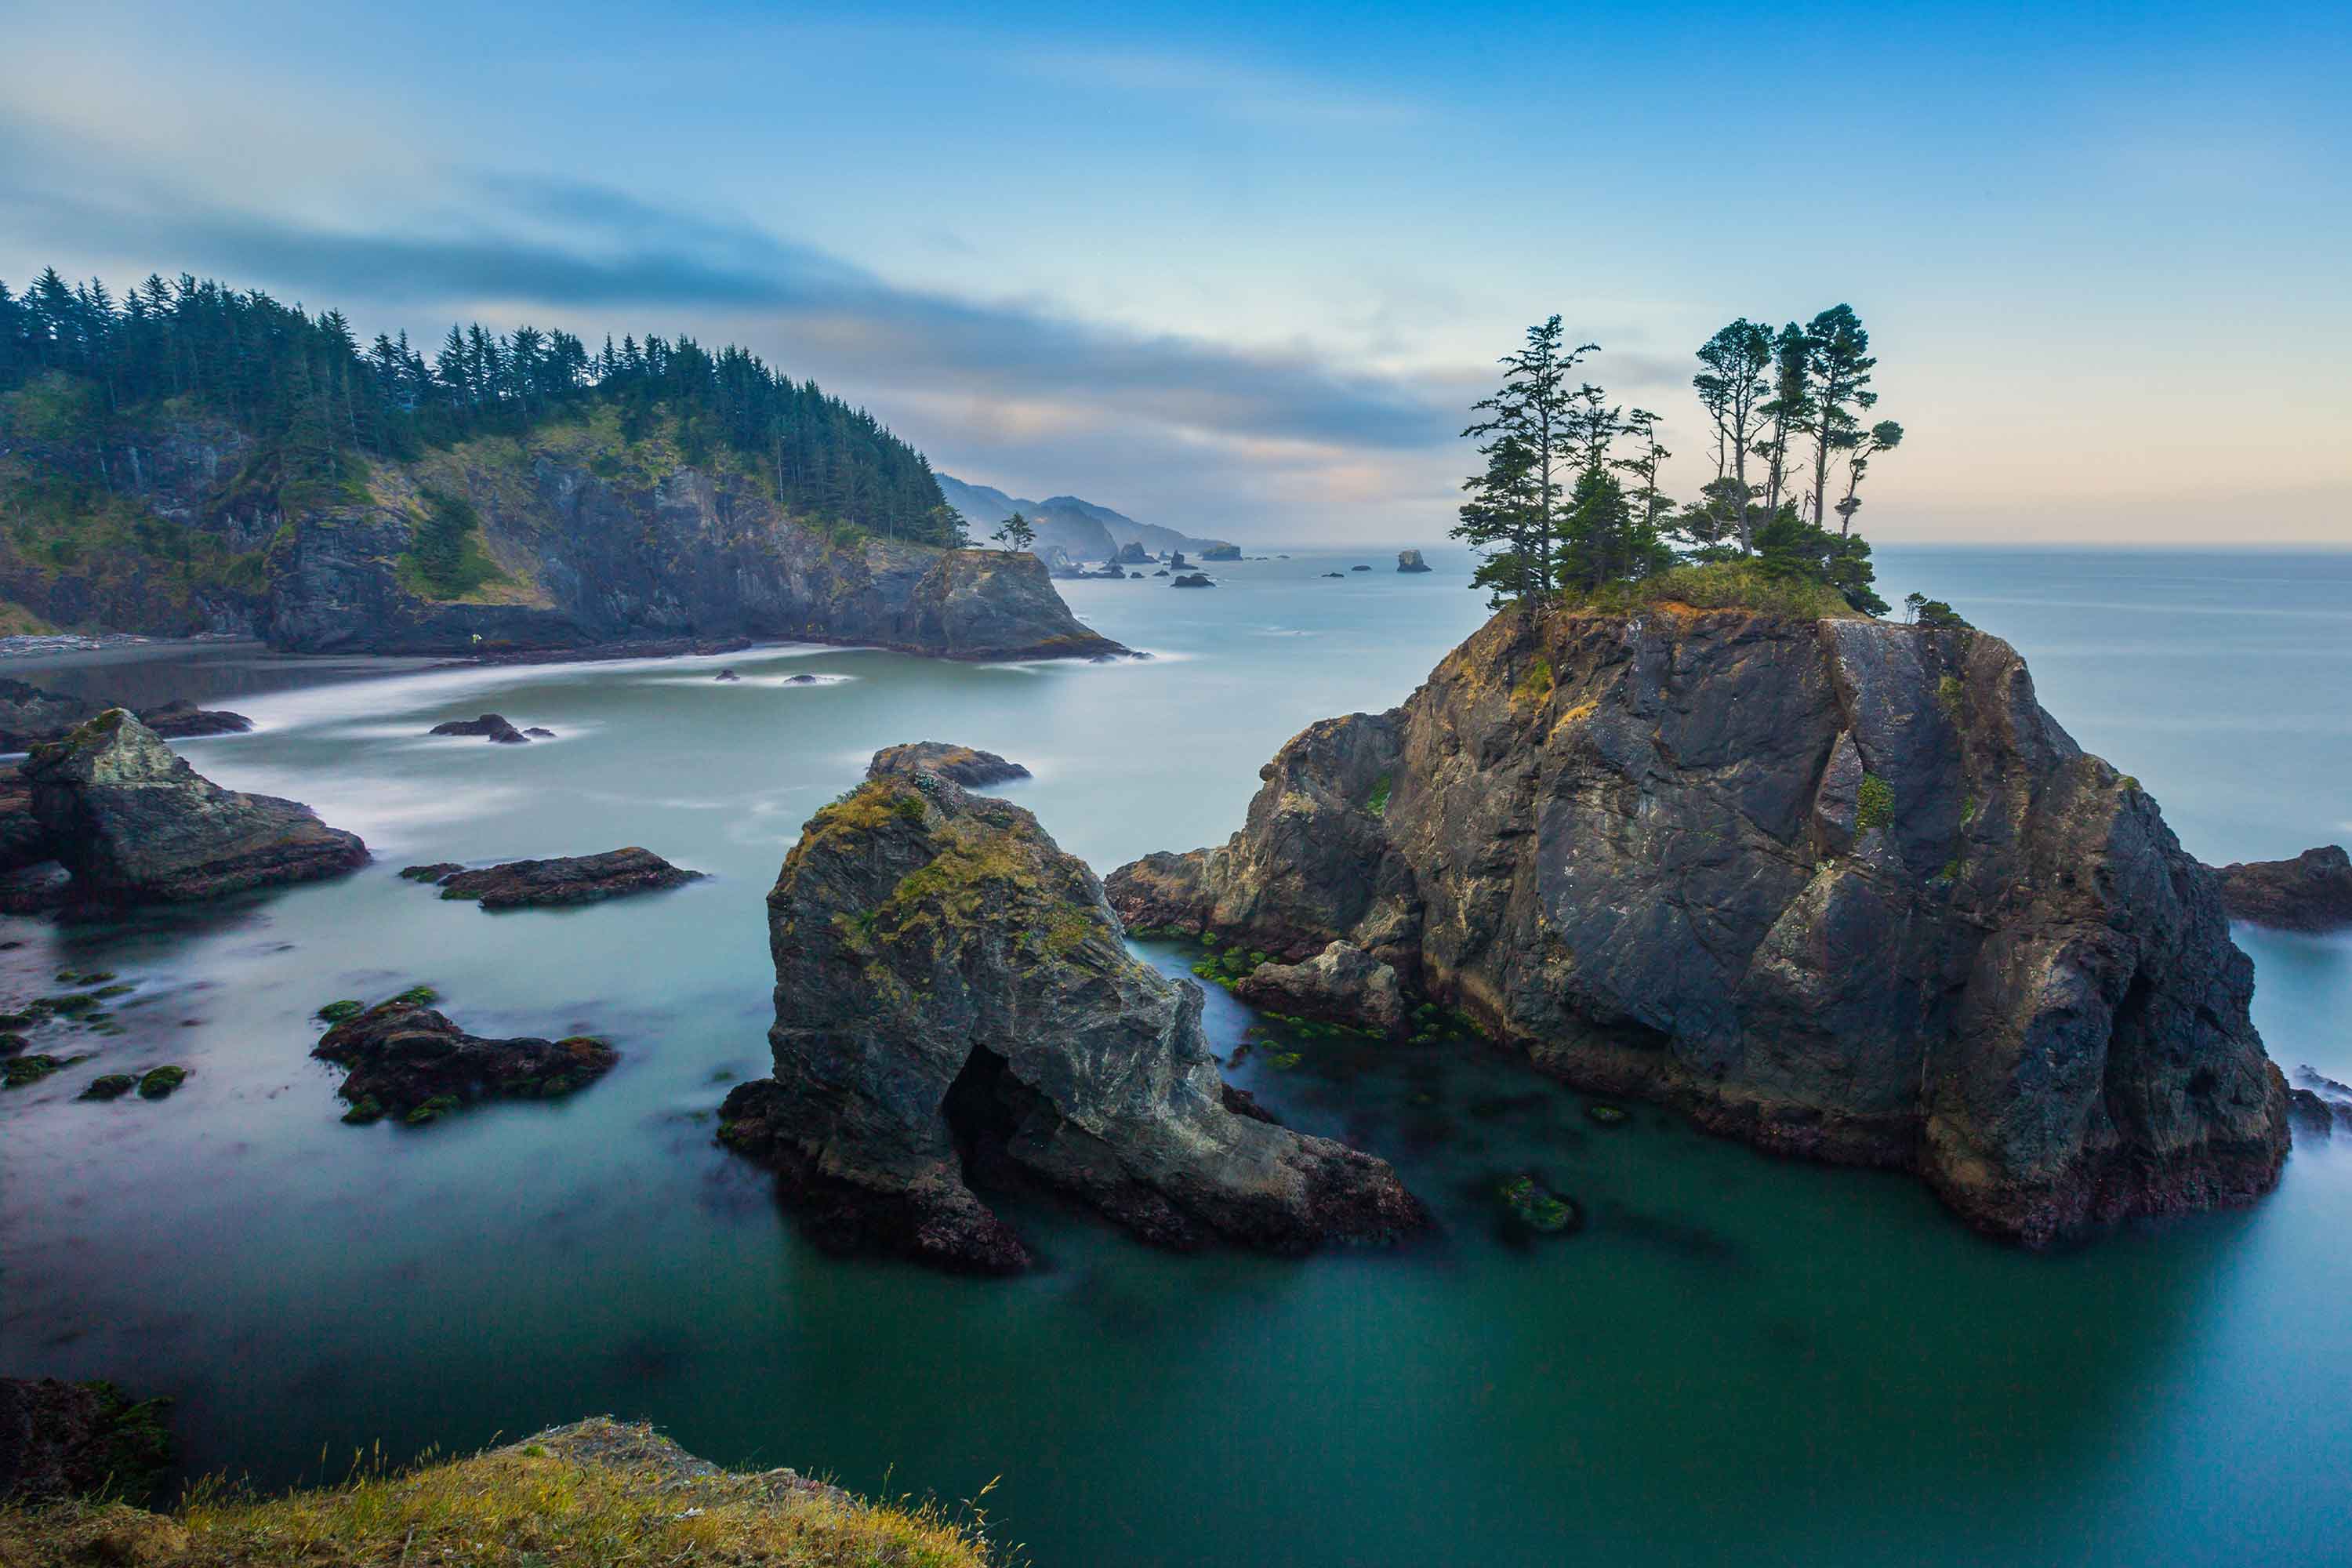 Trees and rocks along the Oregon coast